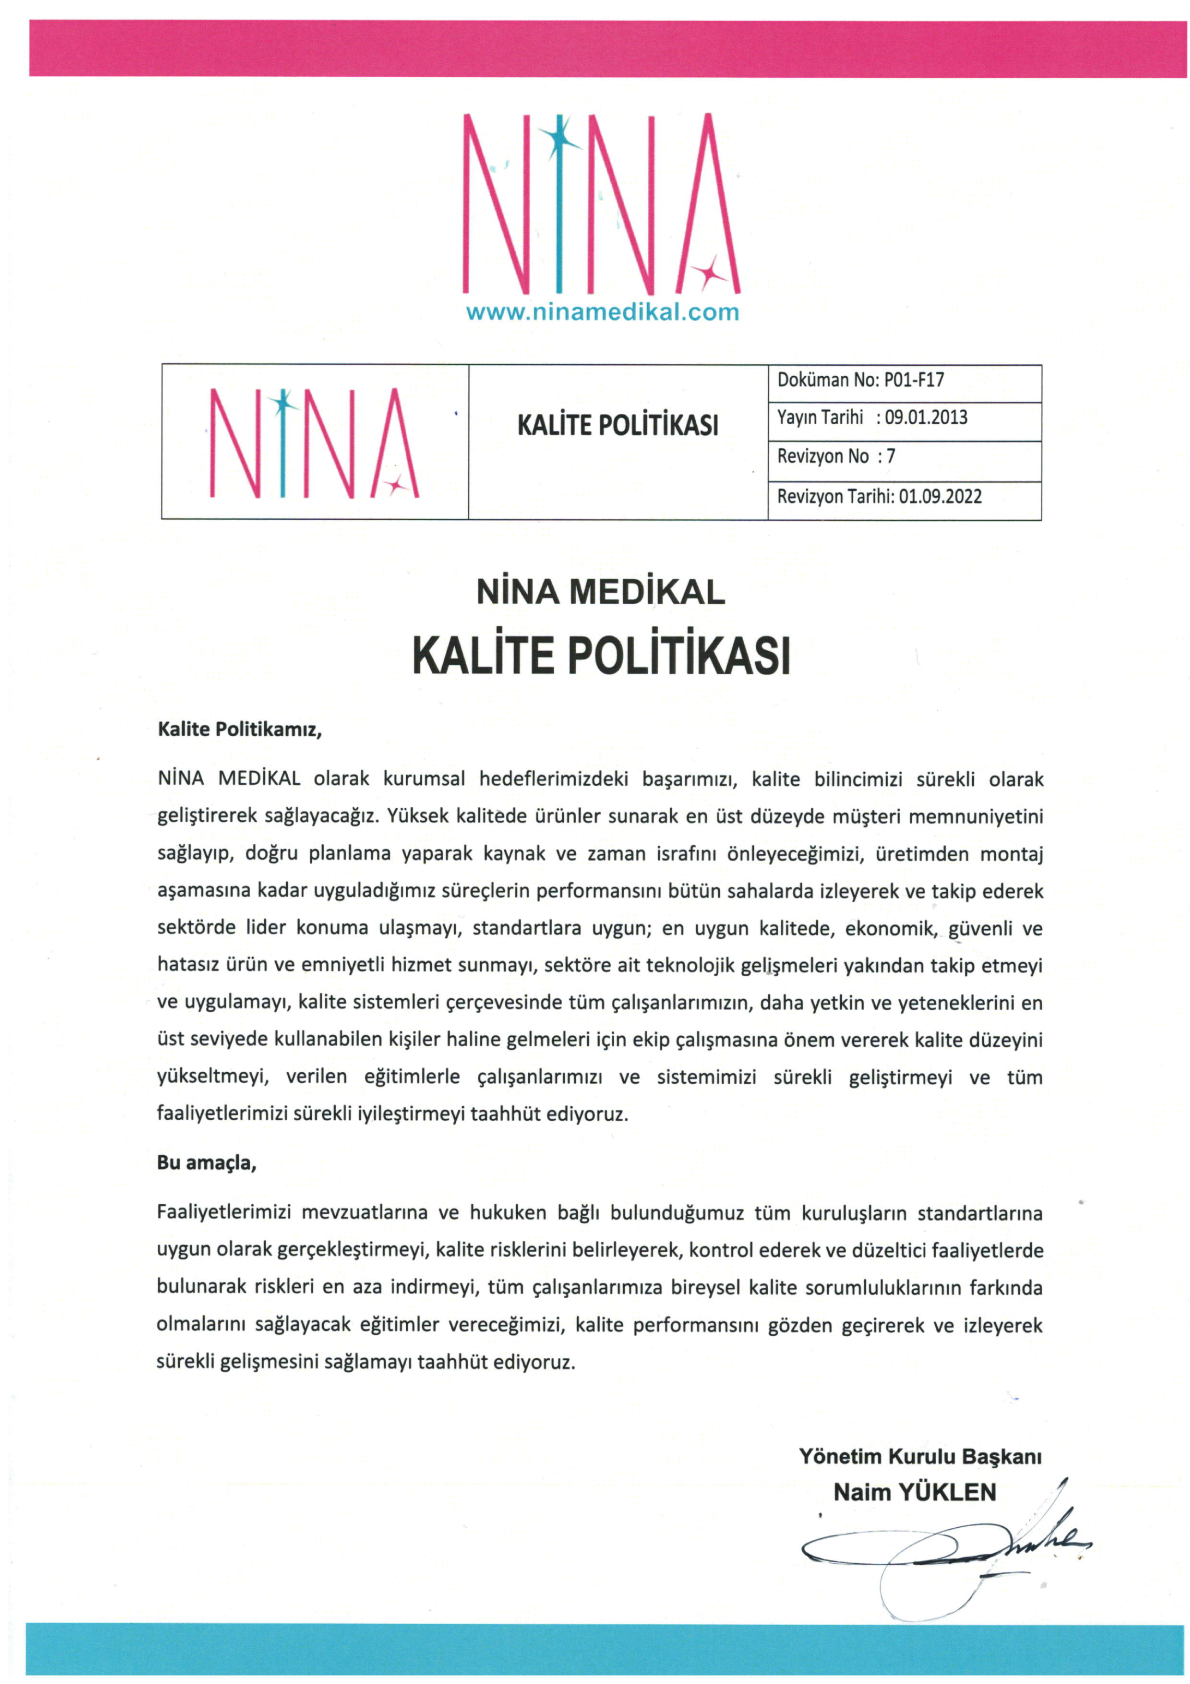 Nina Kalite Politikası-pdf.png (1.16 MB)